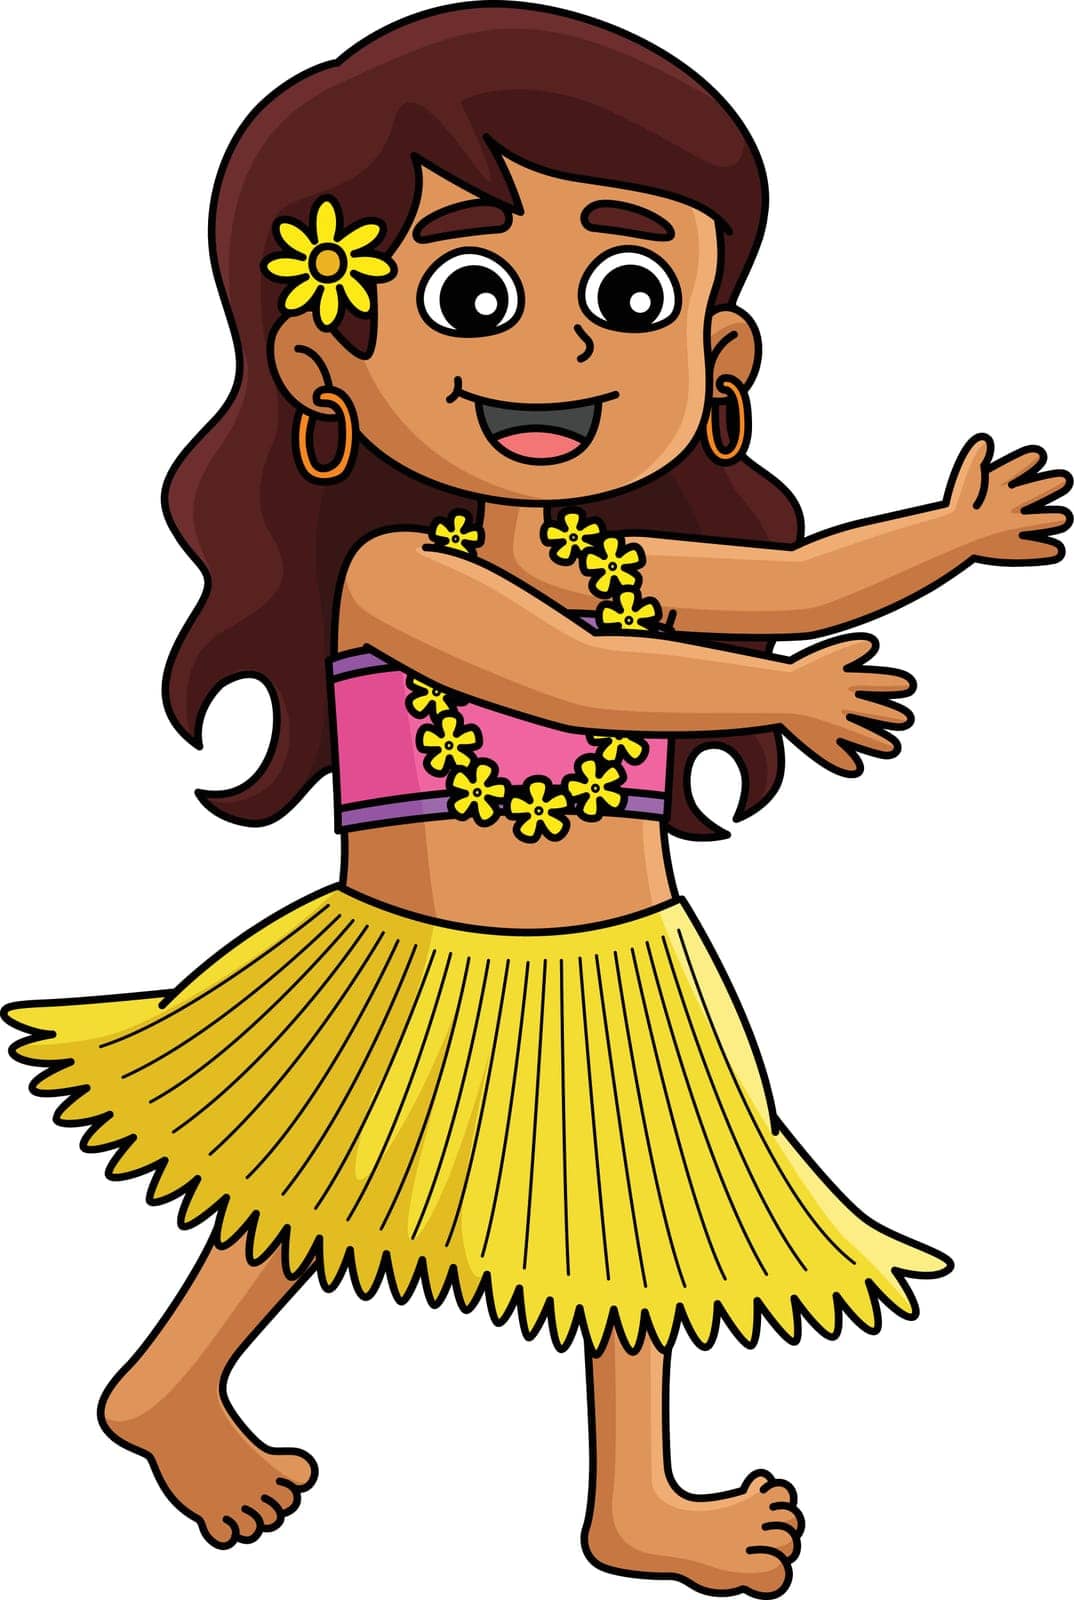 This cartoon clipart shows a Girl doing the Hawaiian Dance Summer illustration.